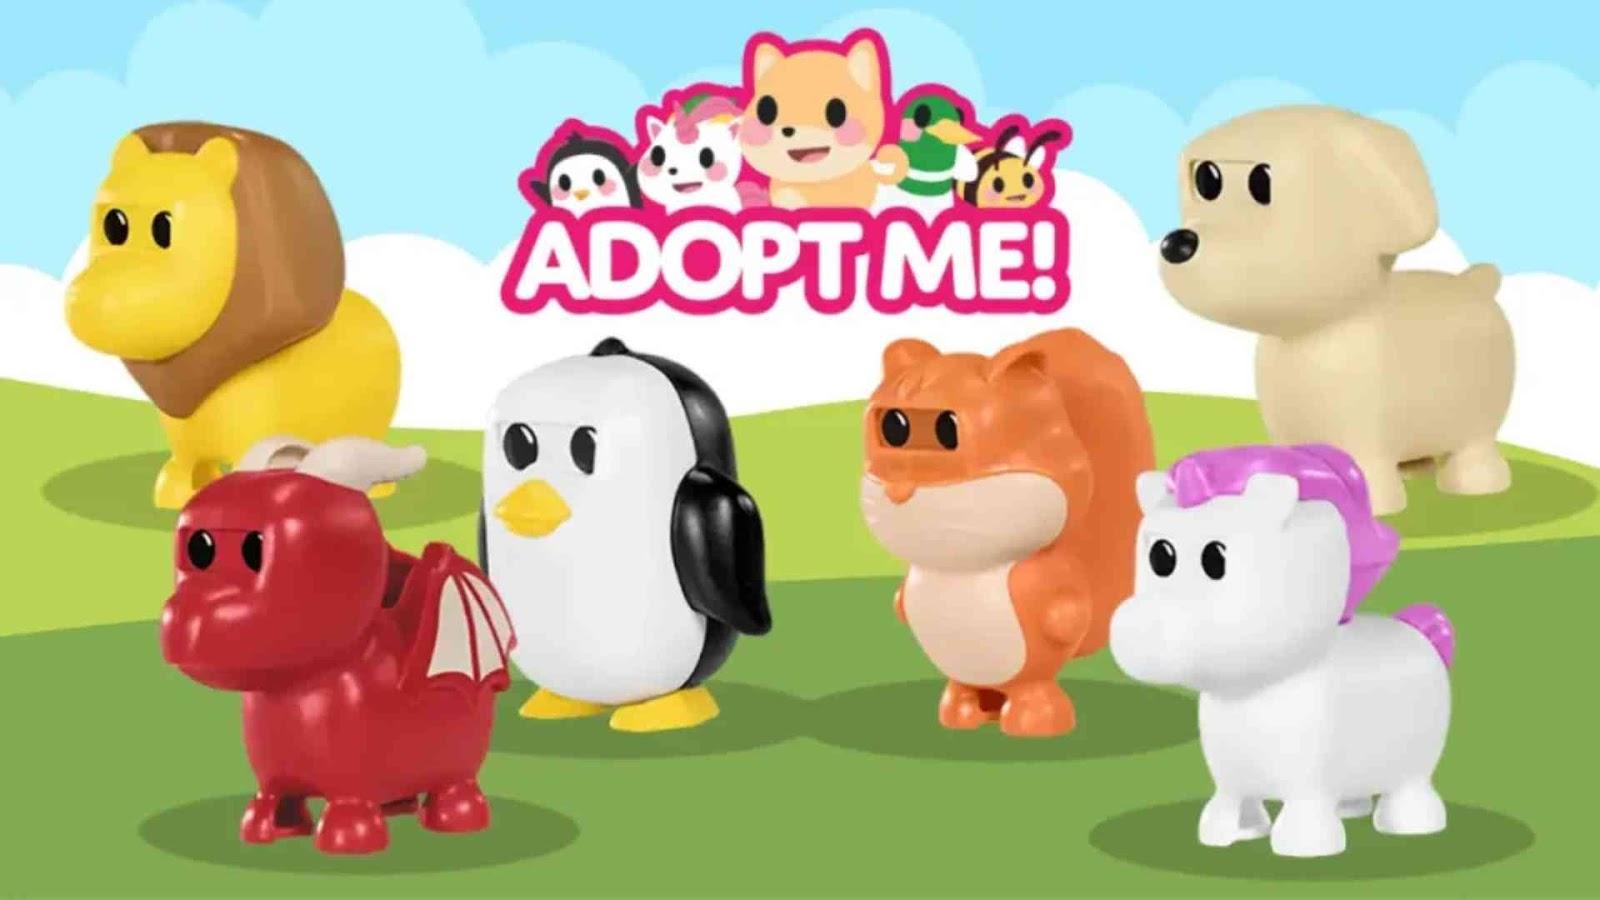 Adopt Me!